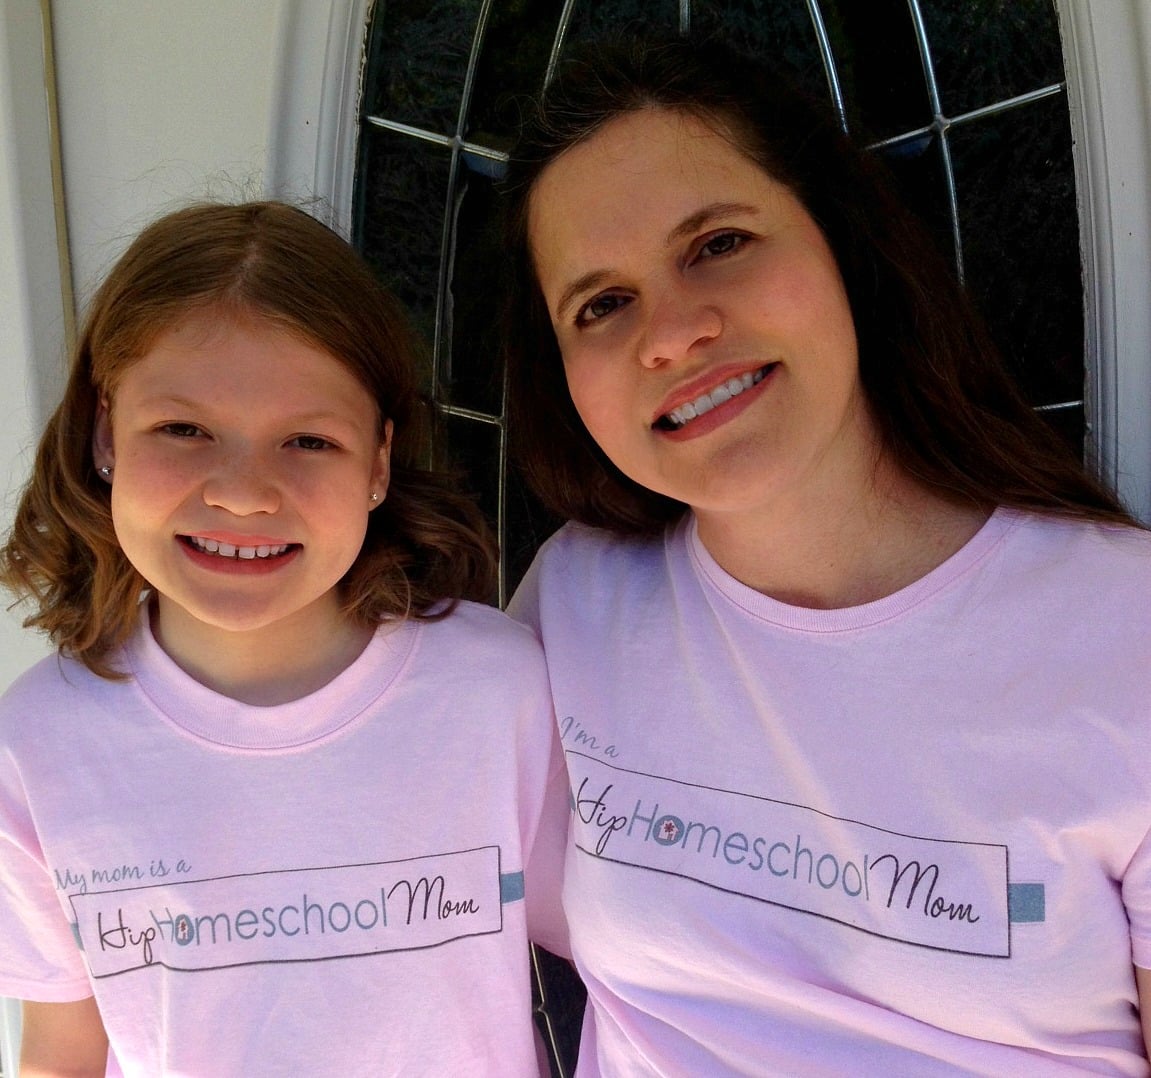 Get Your Hip Homeschool Moms T-Shirts!